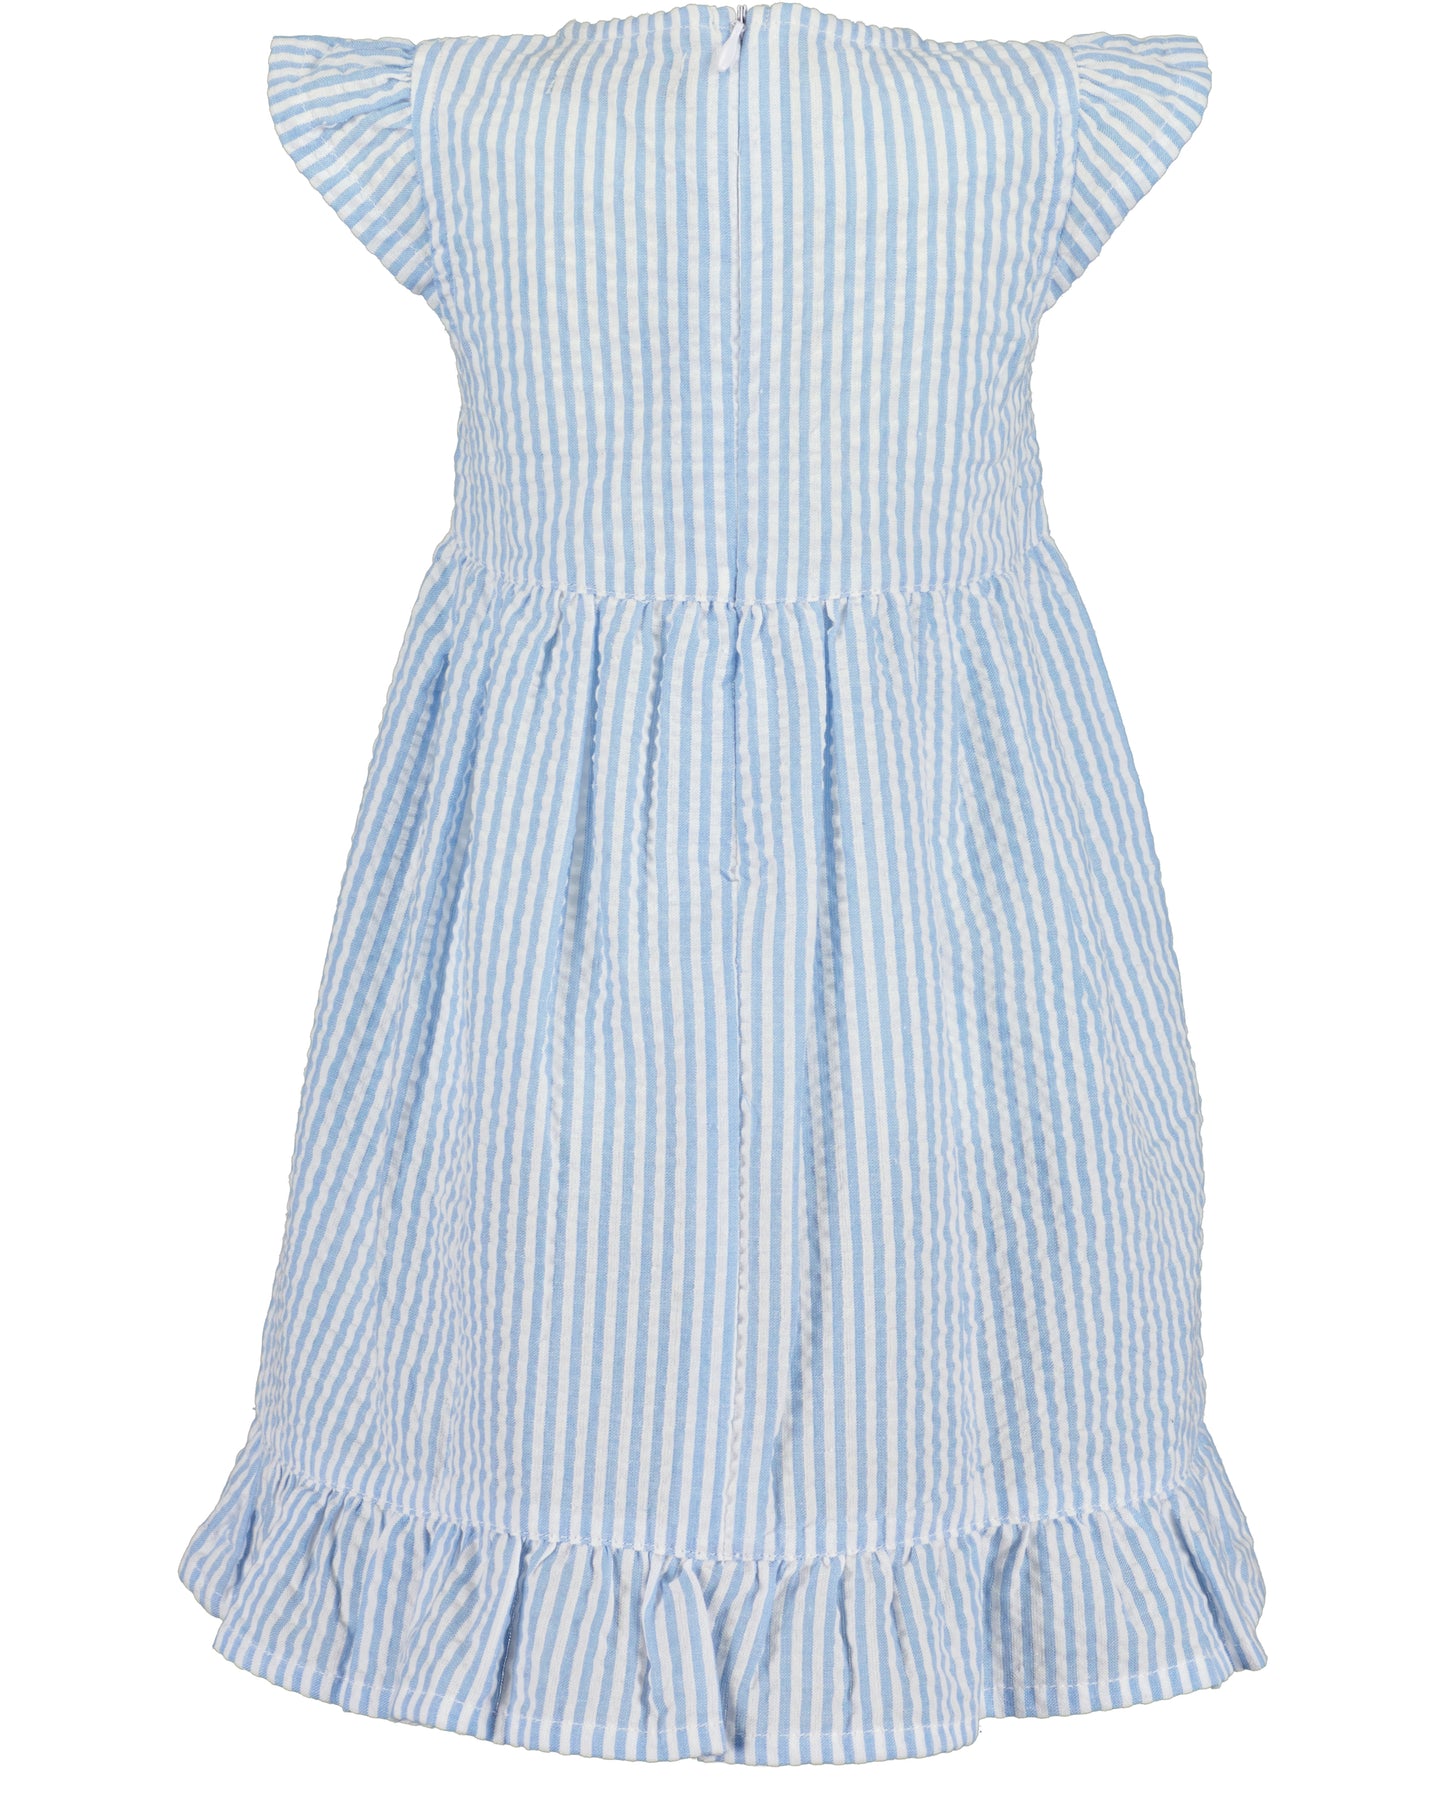 Blue Stripe Summer Dress